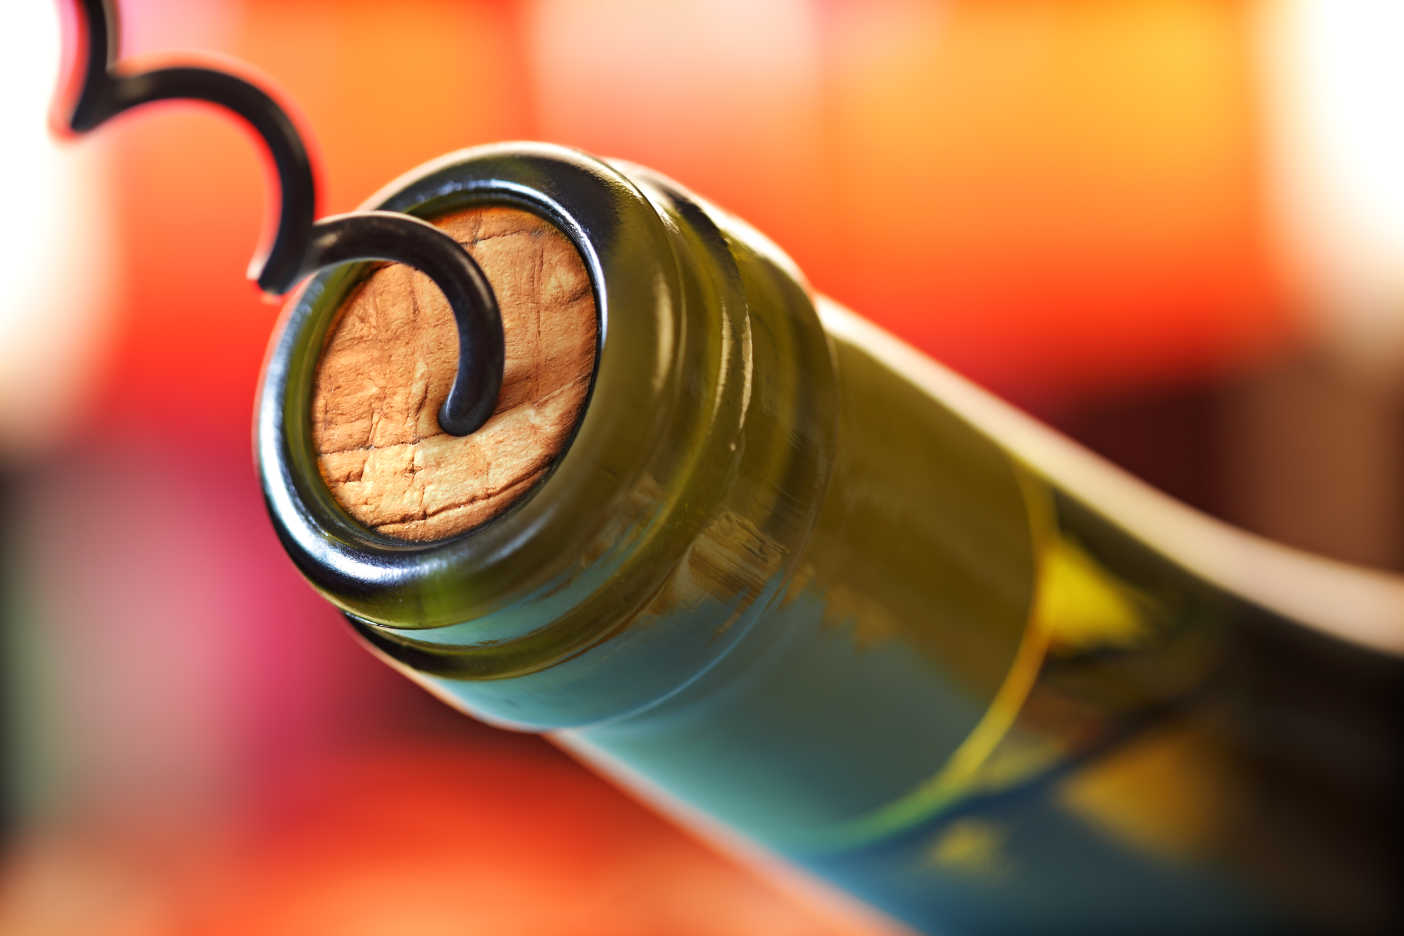 Cork screw and wine bottle 